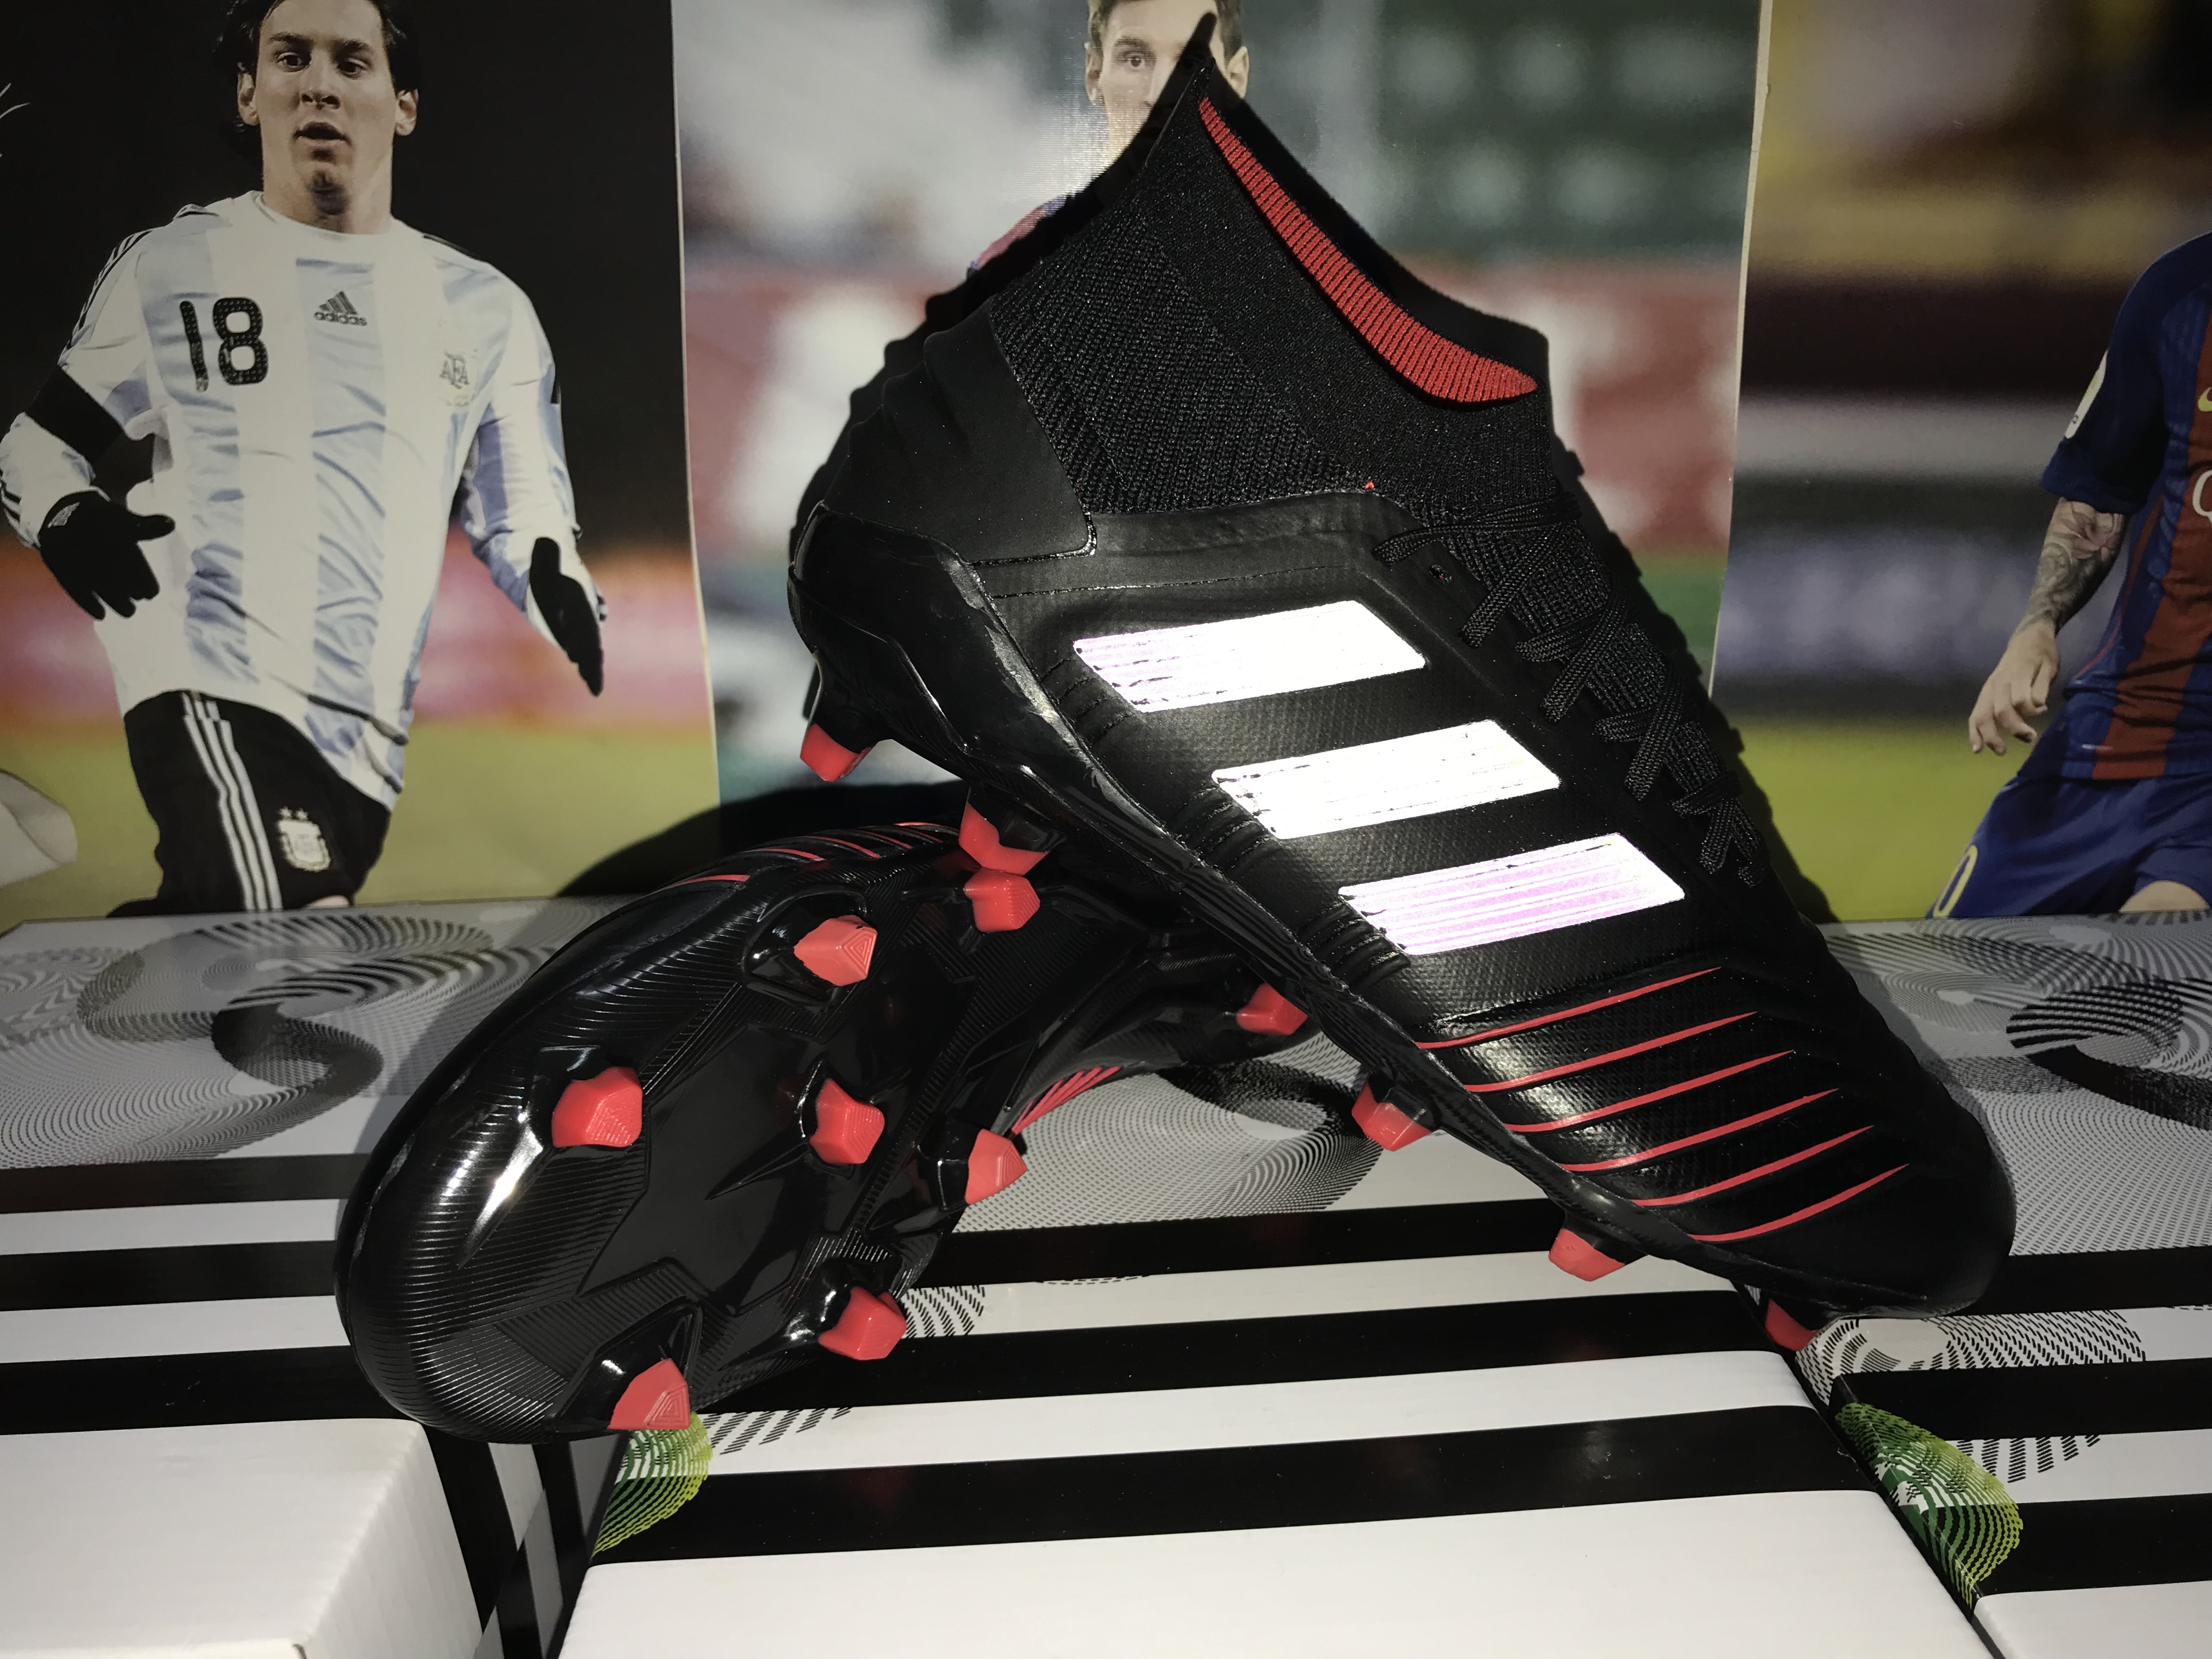 Adidas Predator 19.1 FG 'Black Active Red' BC0551 - Elite Performance Football Boots